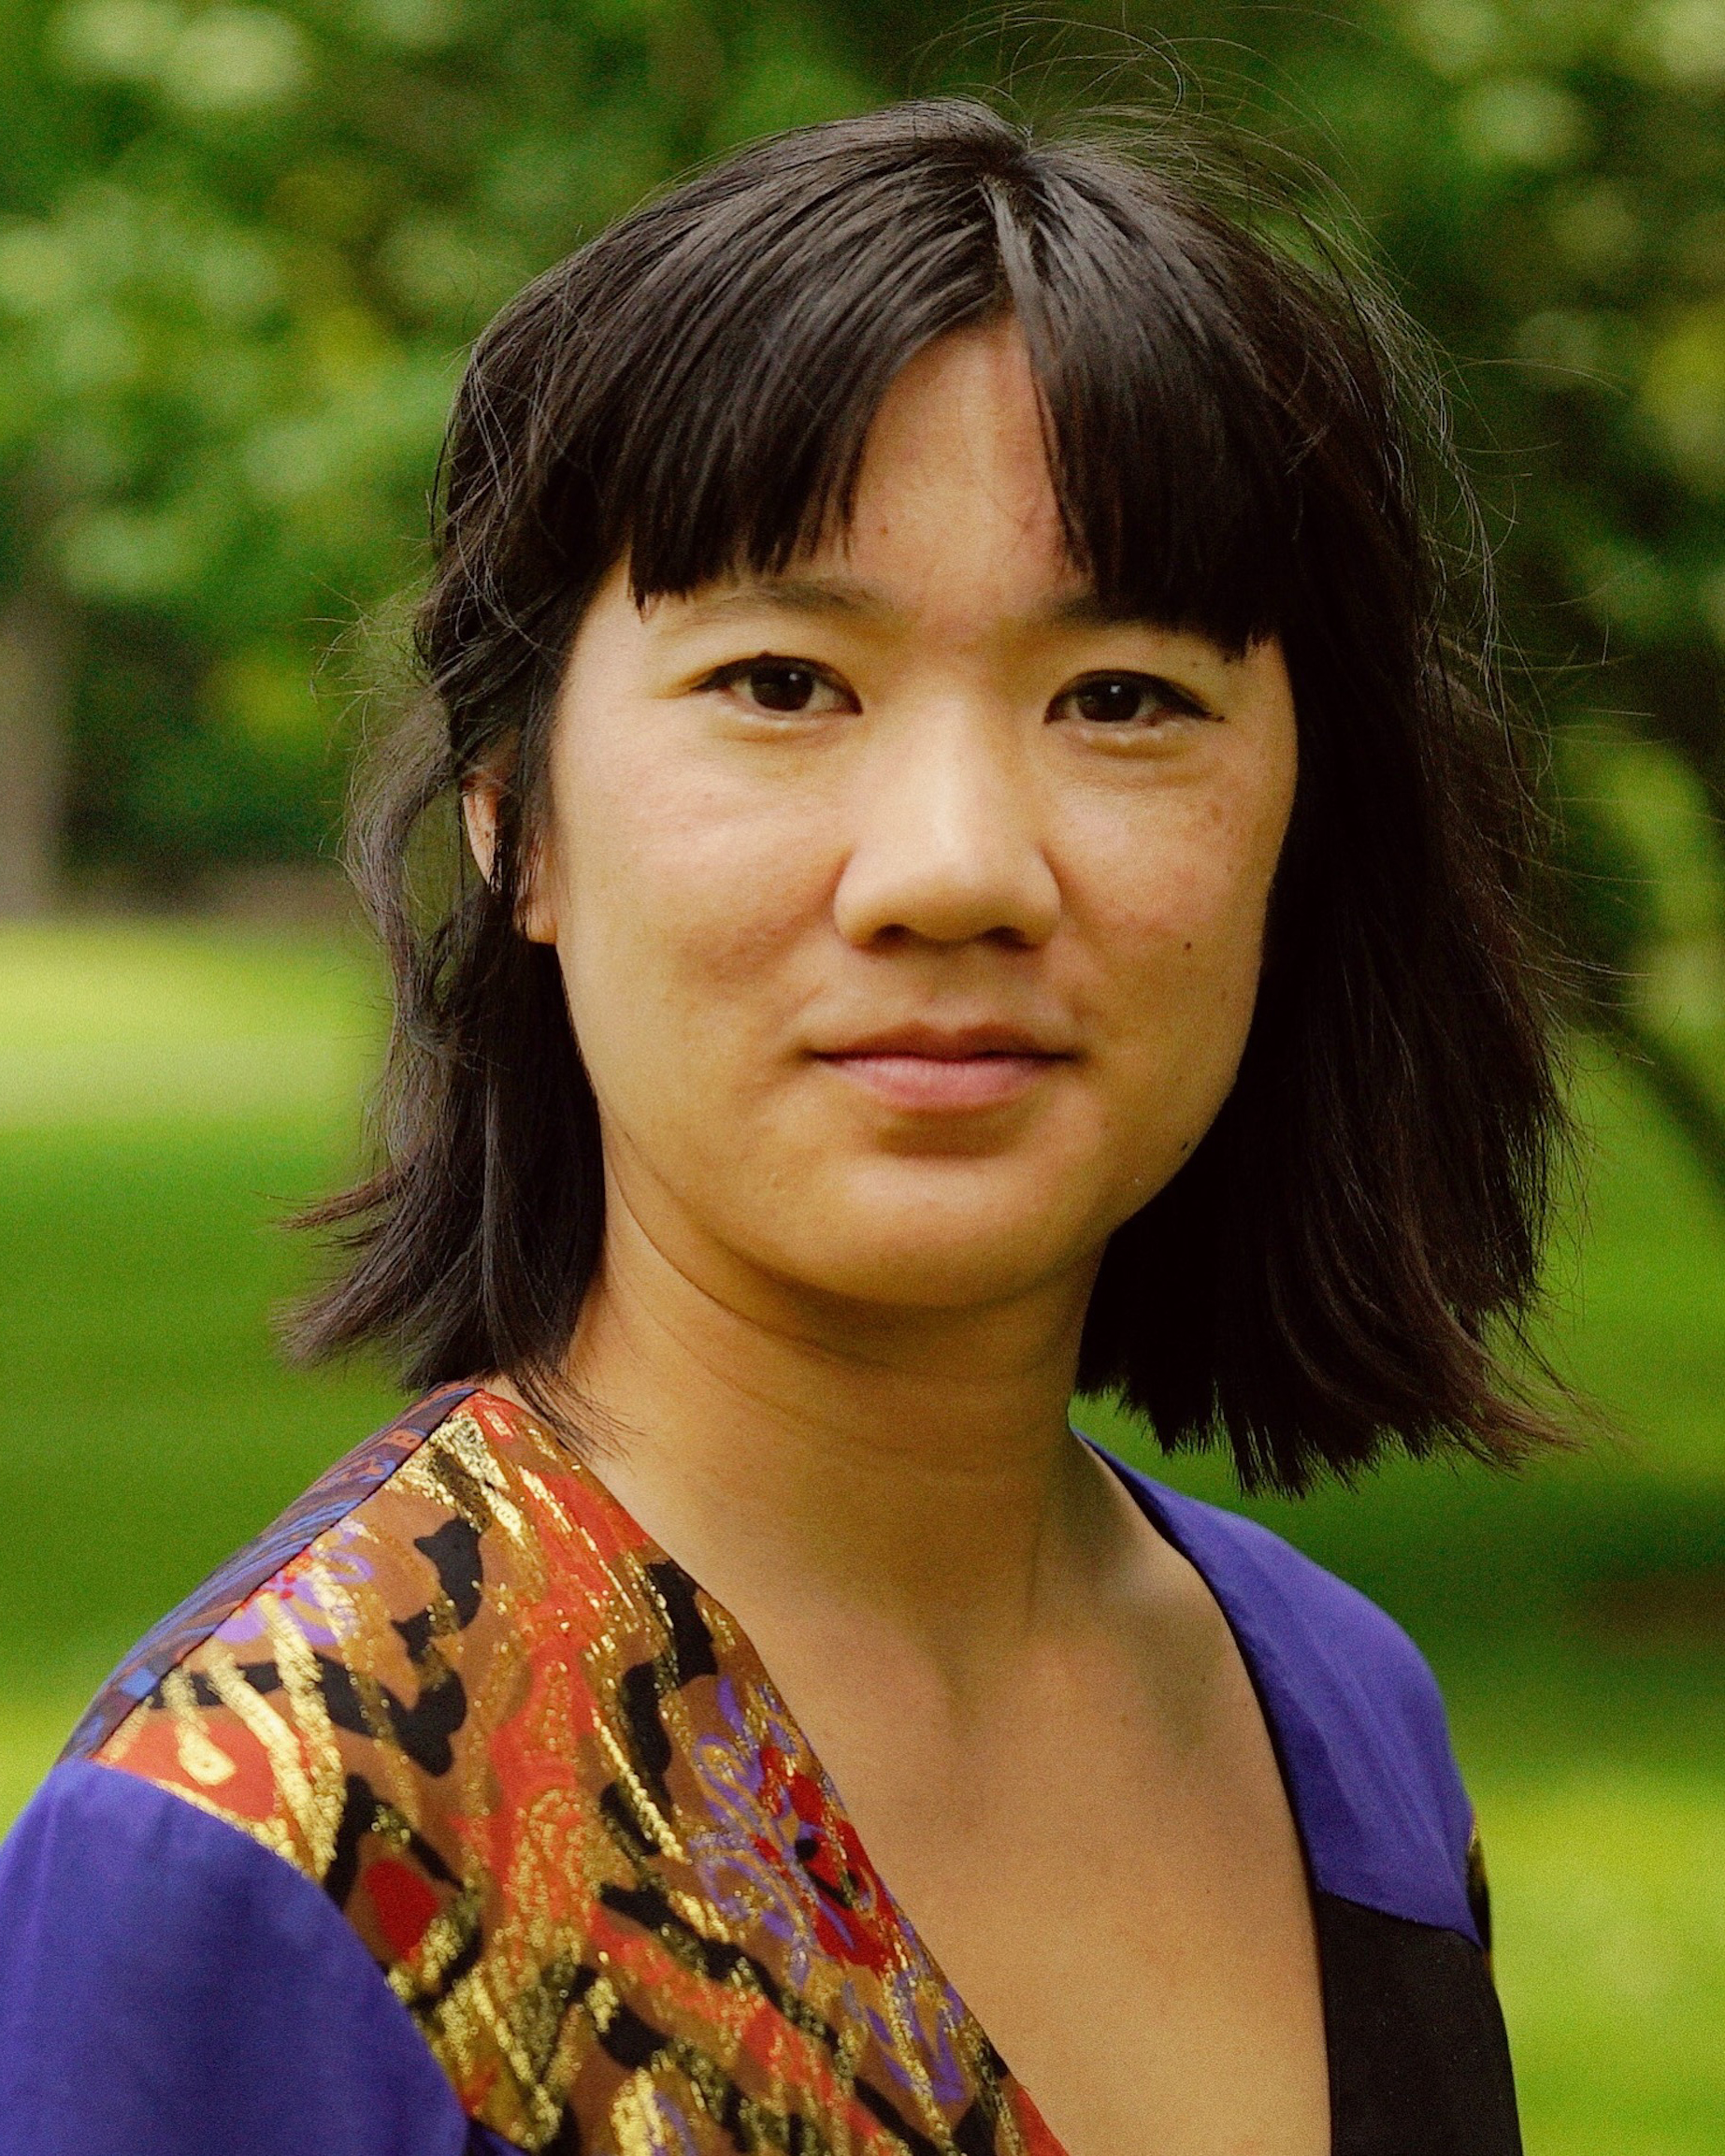 2019 Kate Tufts Discovery Award winner Diana Khoi Nguyen